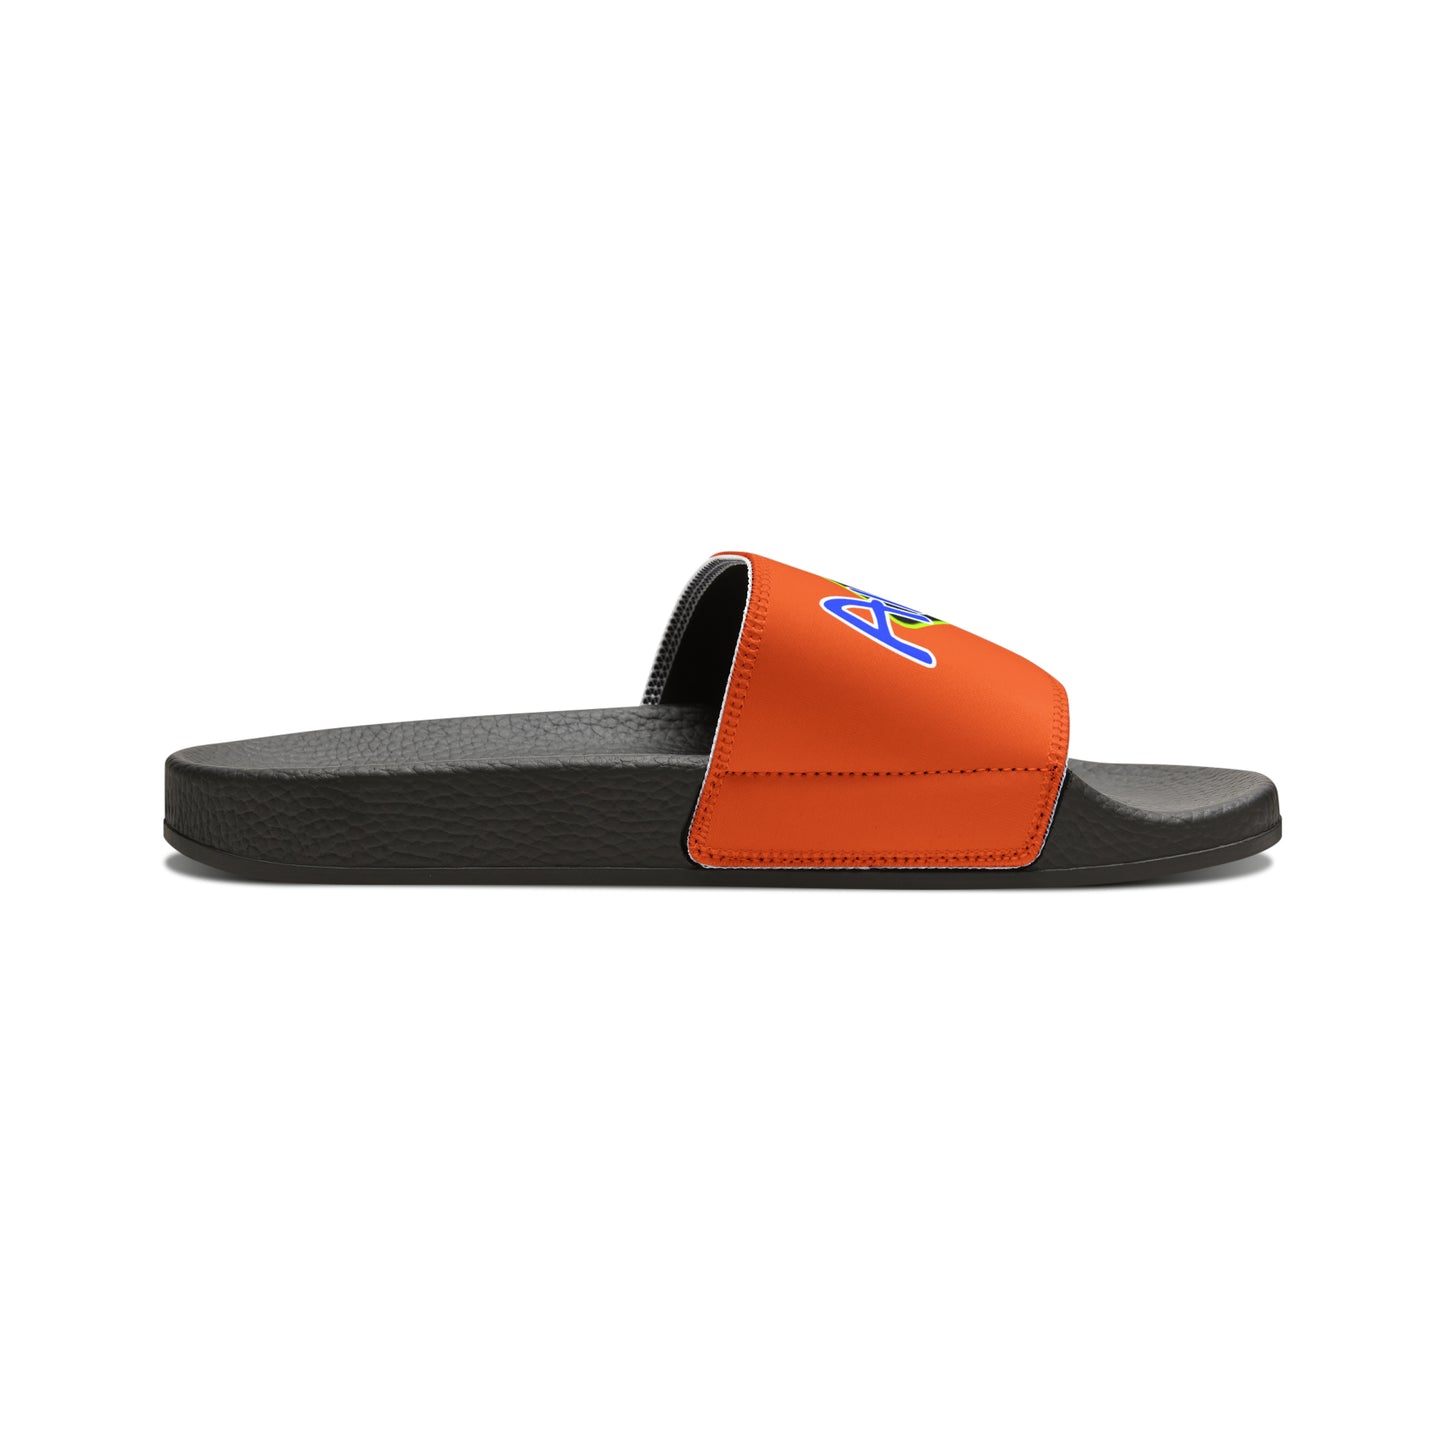 Men's Neon & Blue ALdre Slide Sandals (Orange)